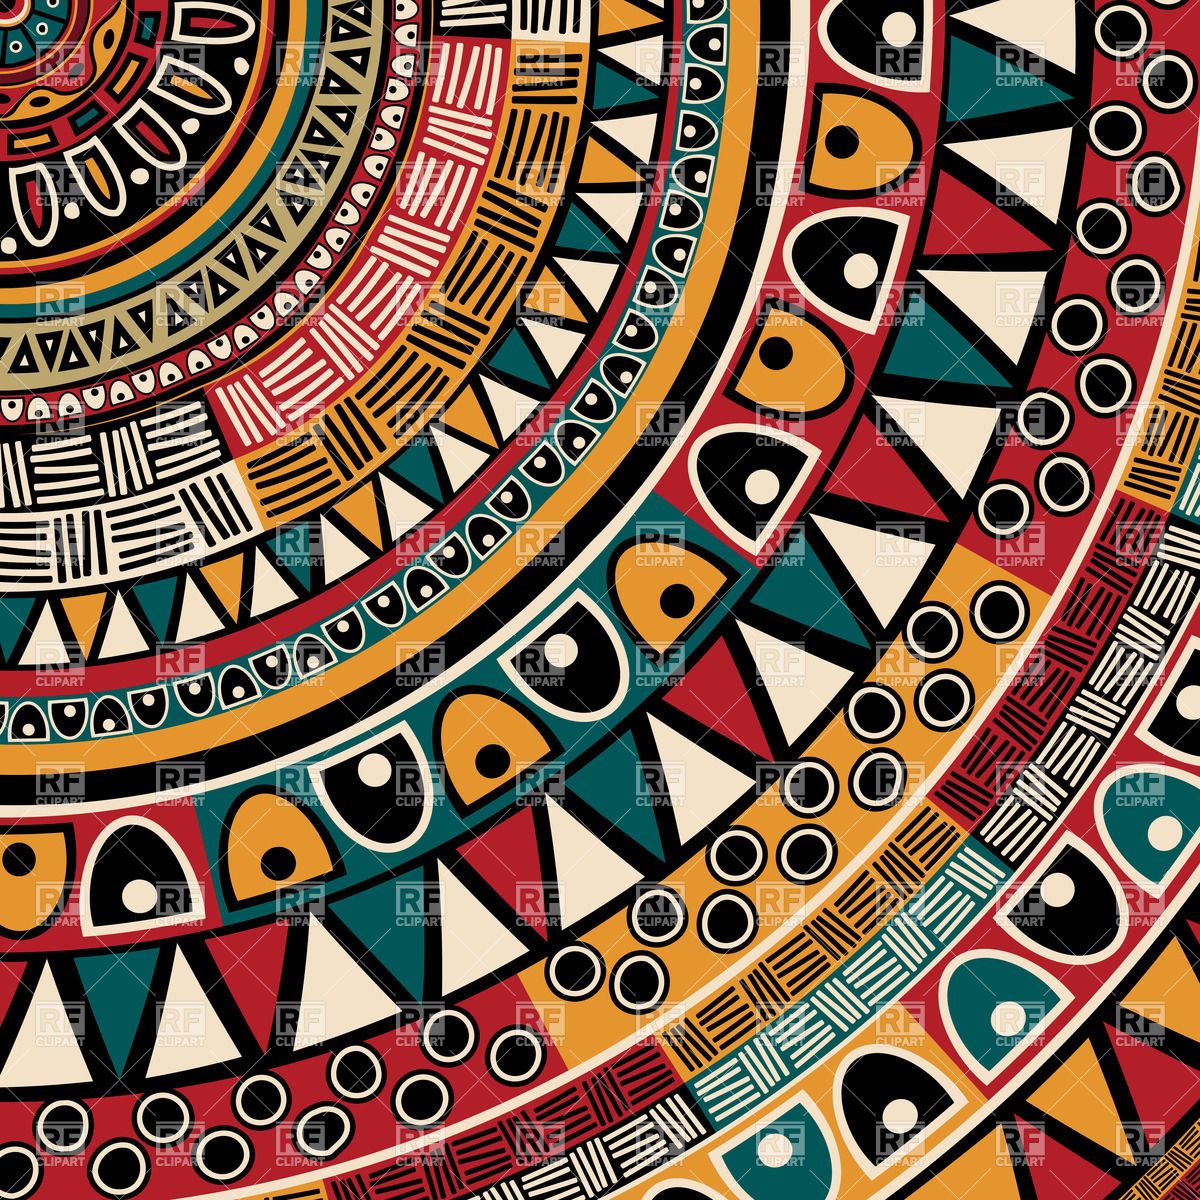 Tribal Design Wallpapers